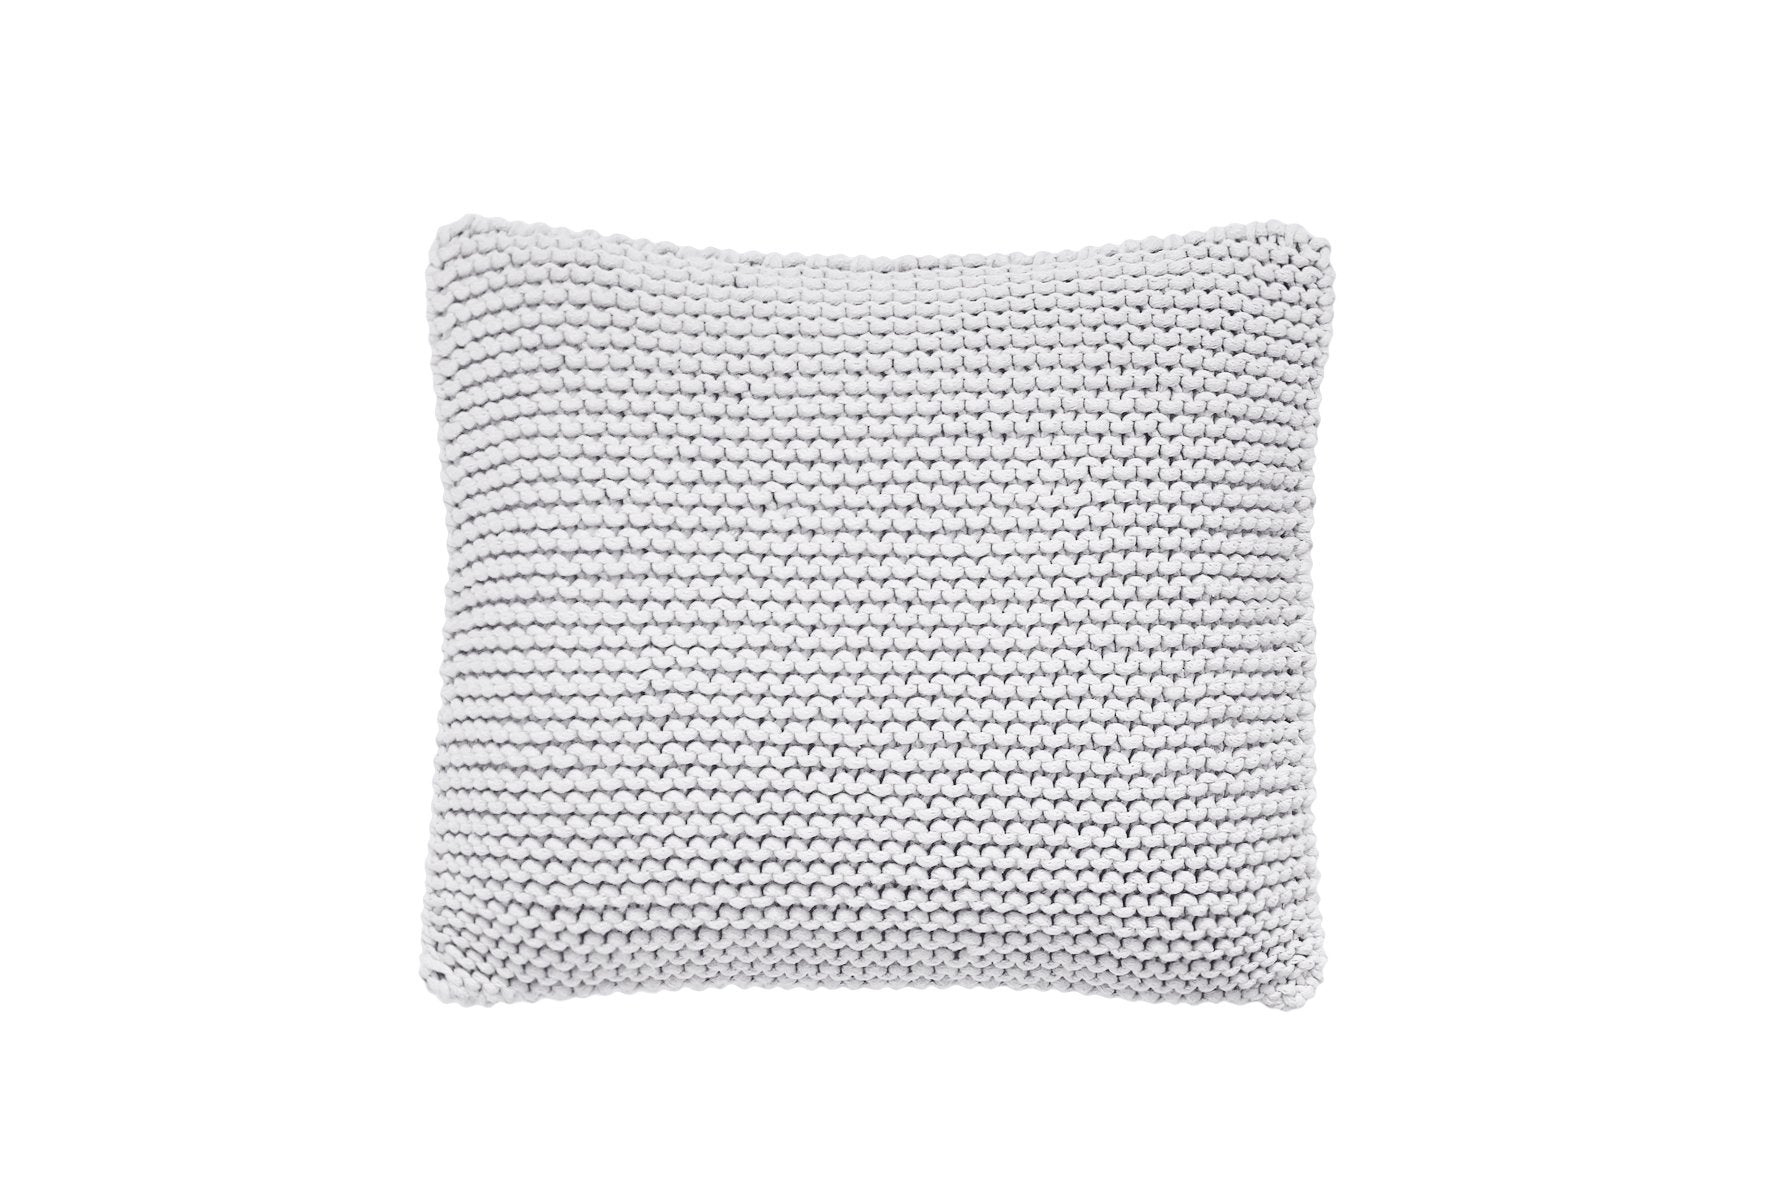 Zuri House Knitted Cushion | LIGHT GREY - 1 cushion 45 x 45 cm